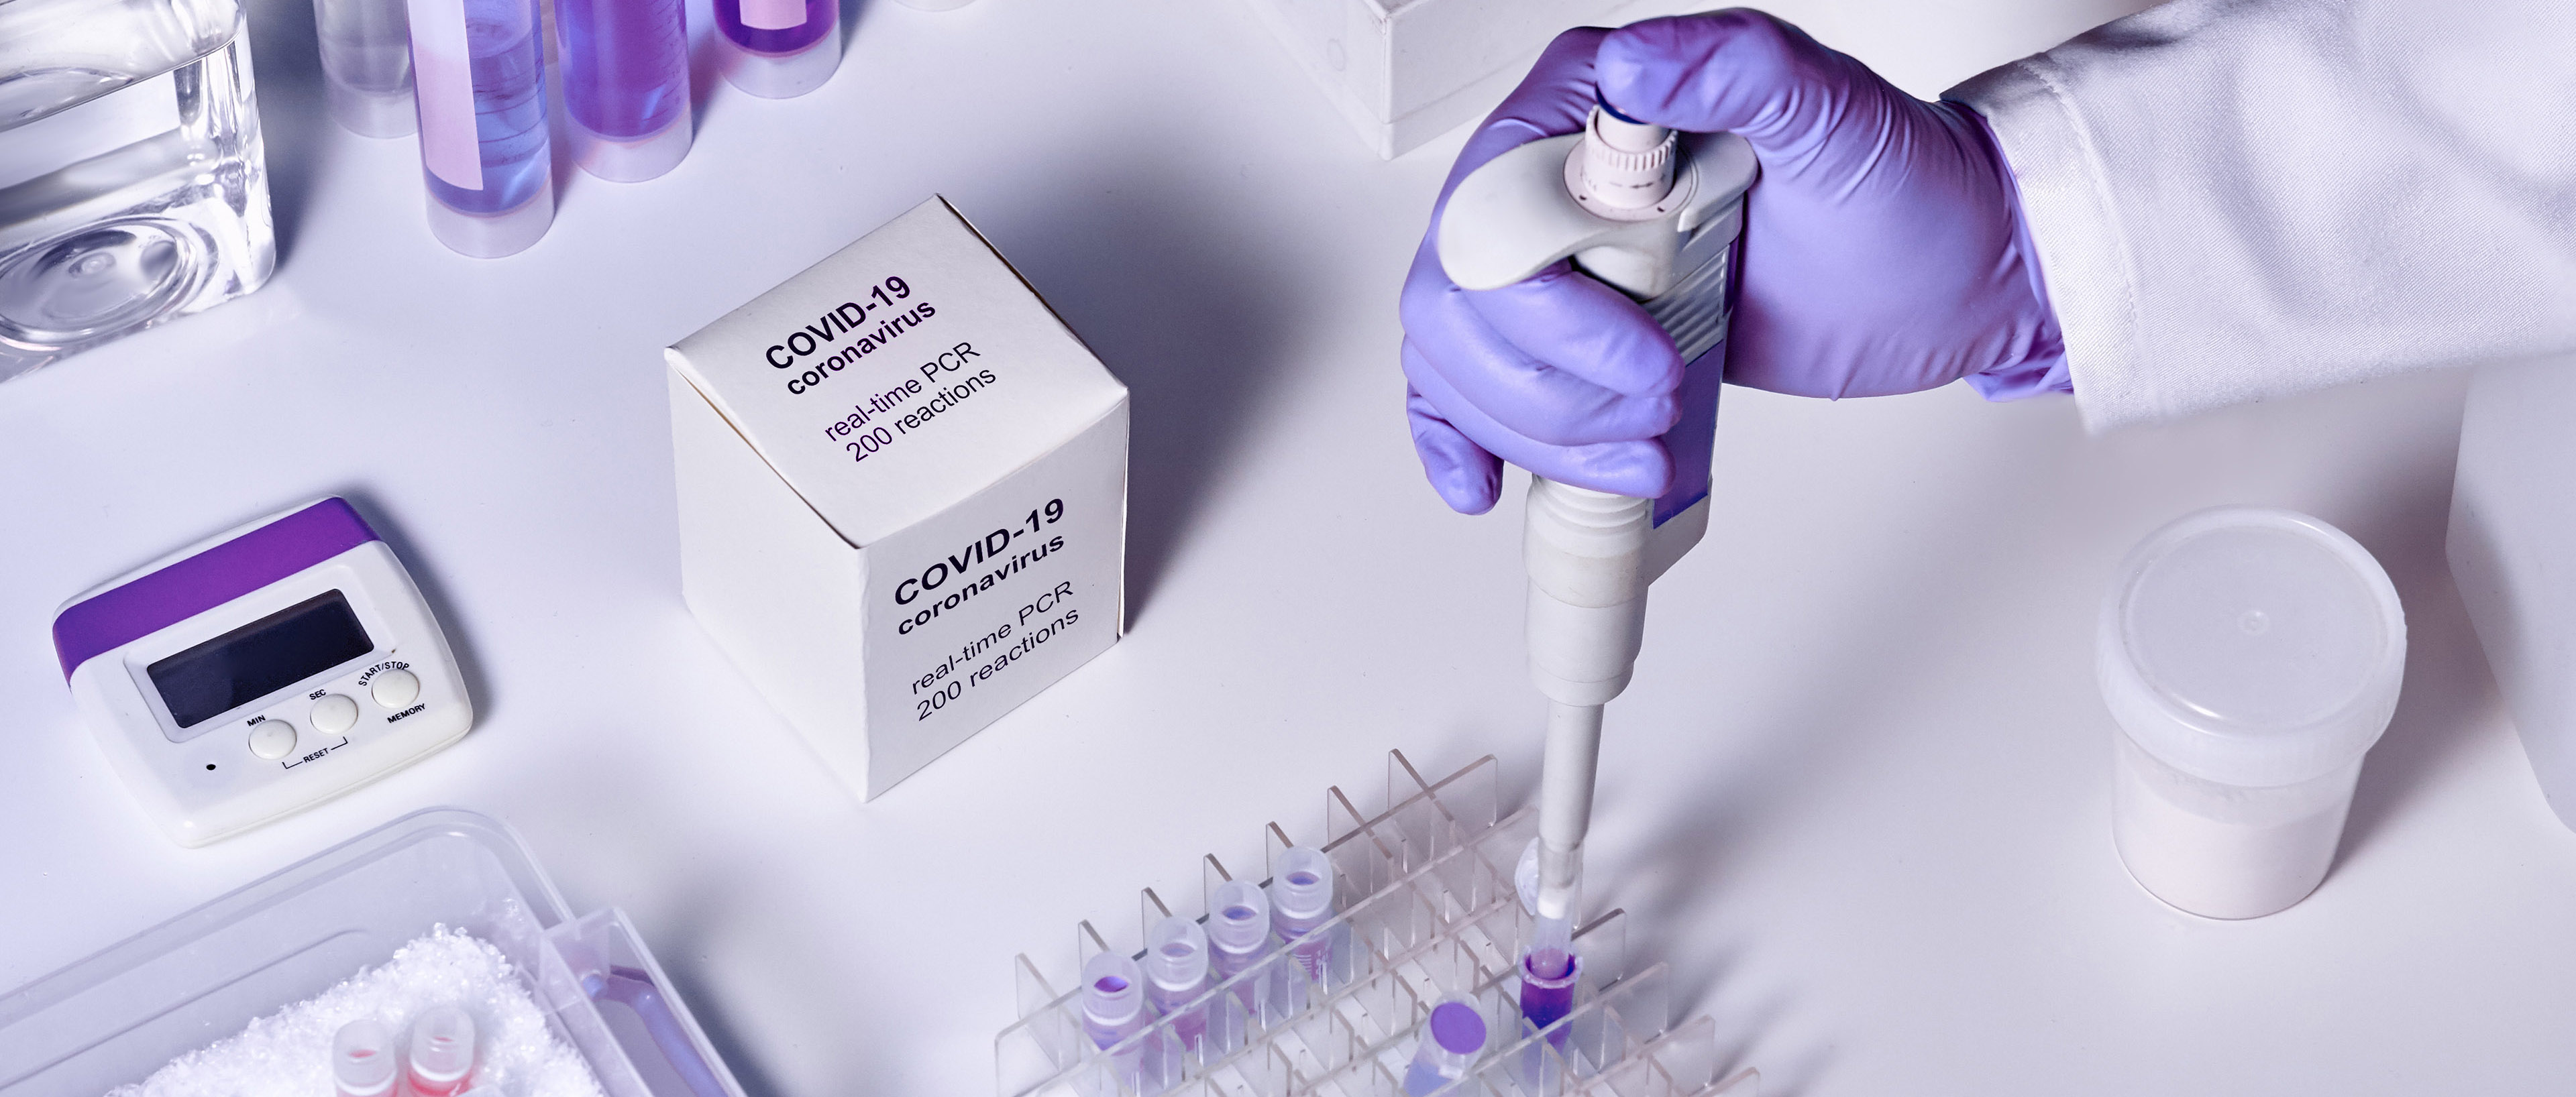 Researcher testing with novel coronavirus diagnostics kit